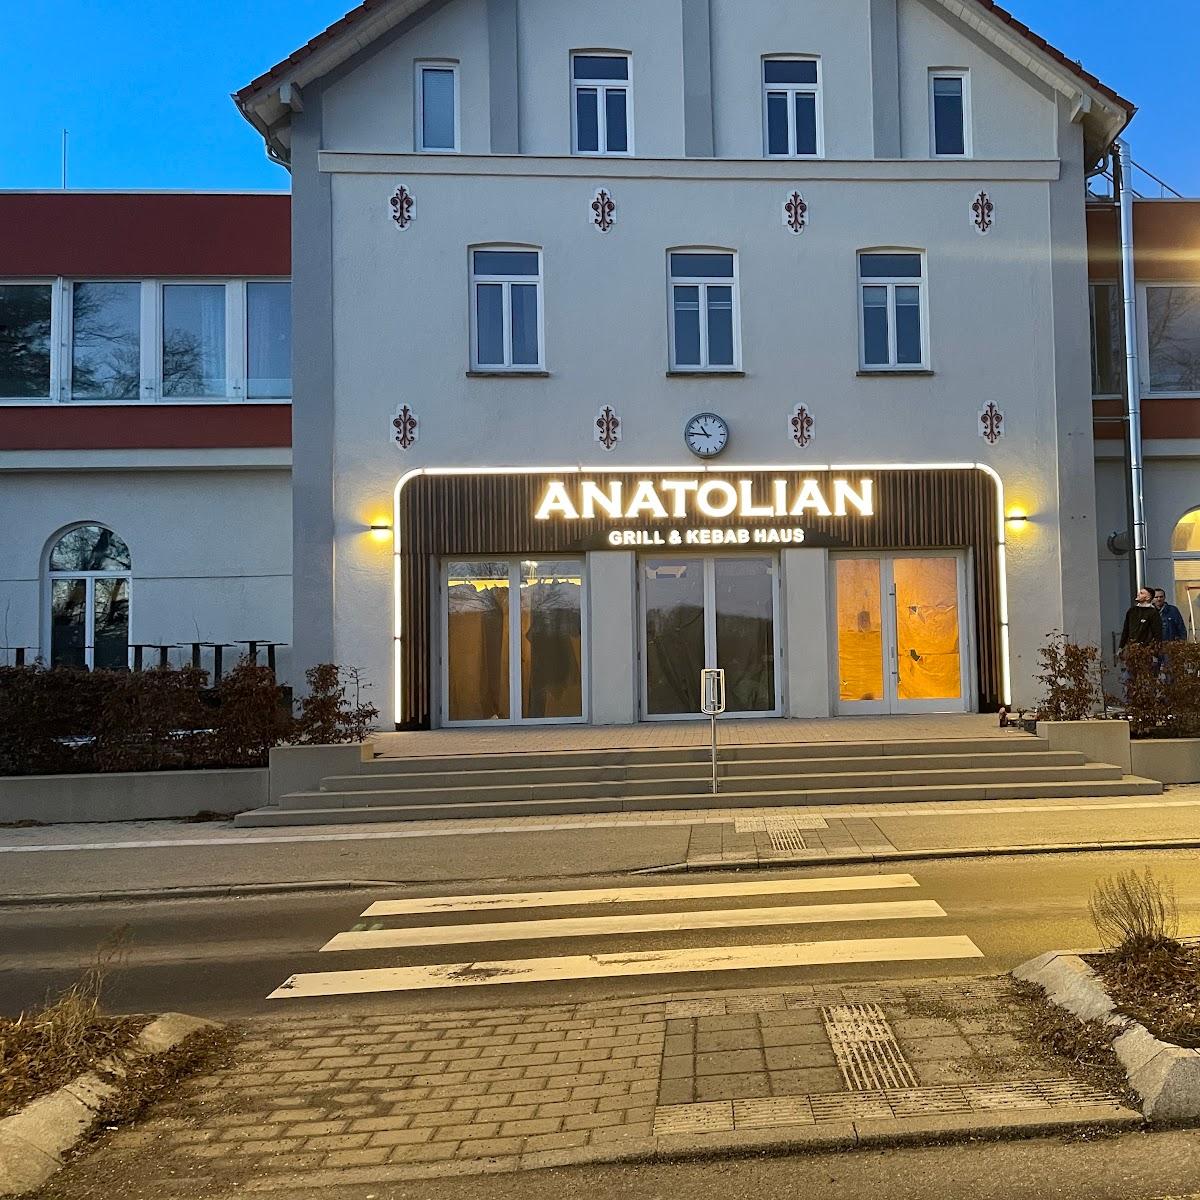 Restaurant "Anatolian Restaurant" in Bad Waldsee